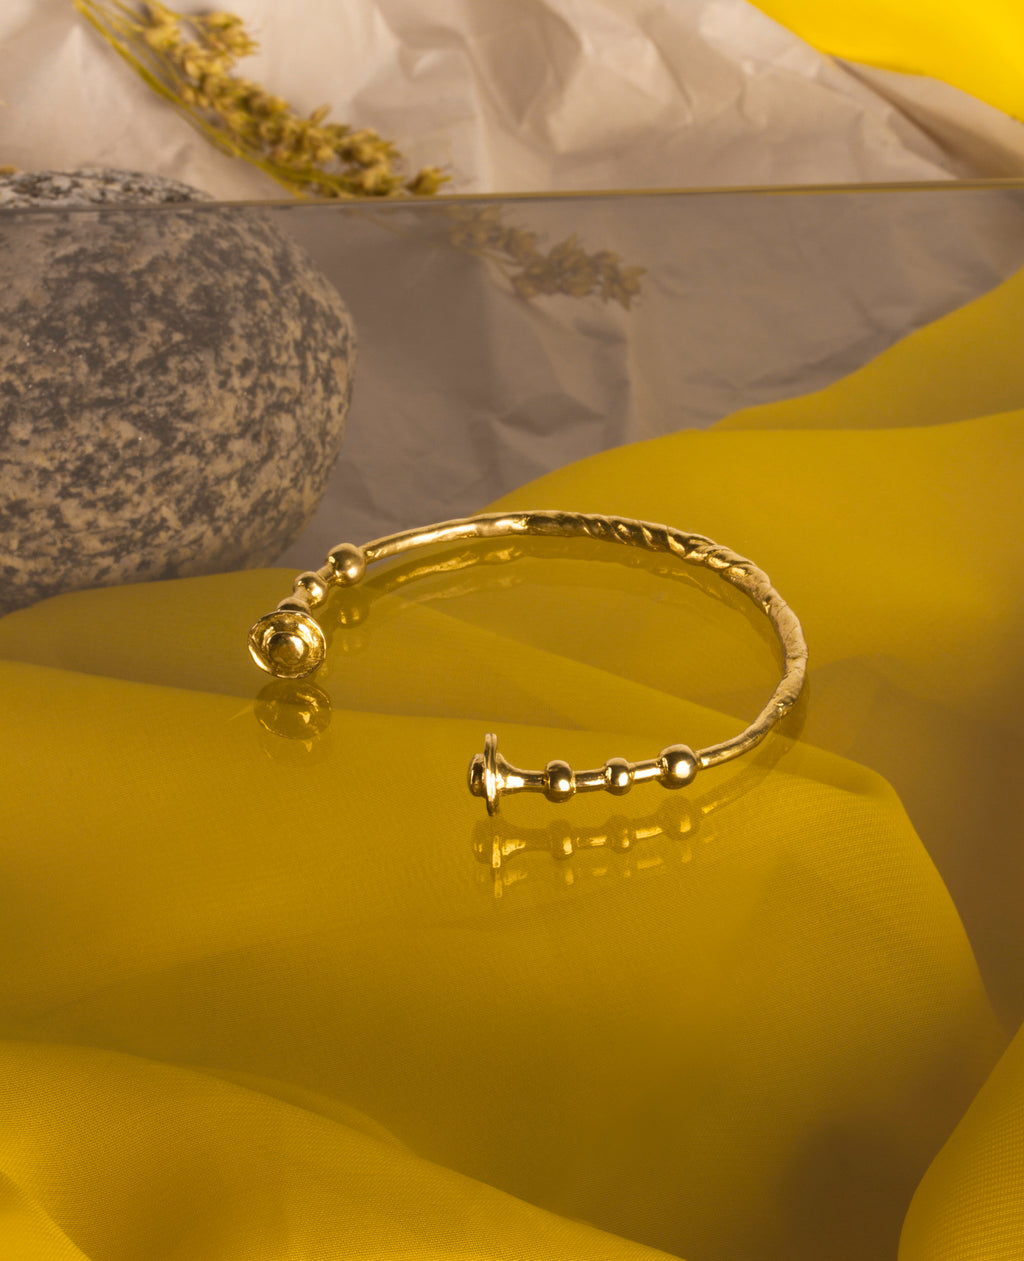 WREN // brass - ORA-C jewelry - handmade jewelry by Montreal based independent designer Caroline Pham